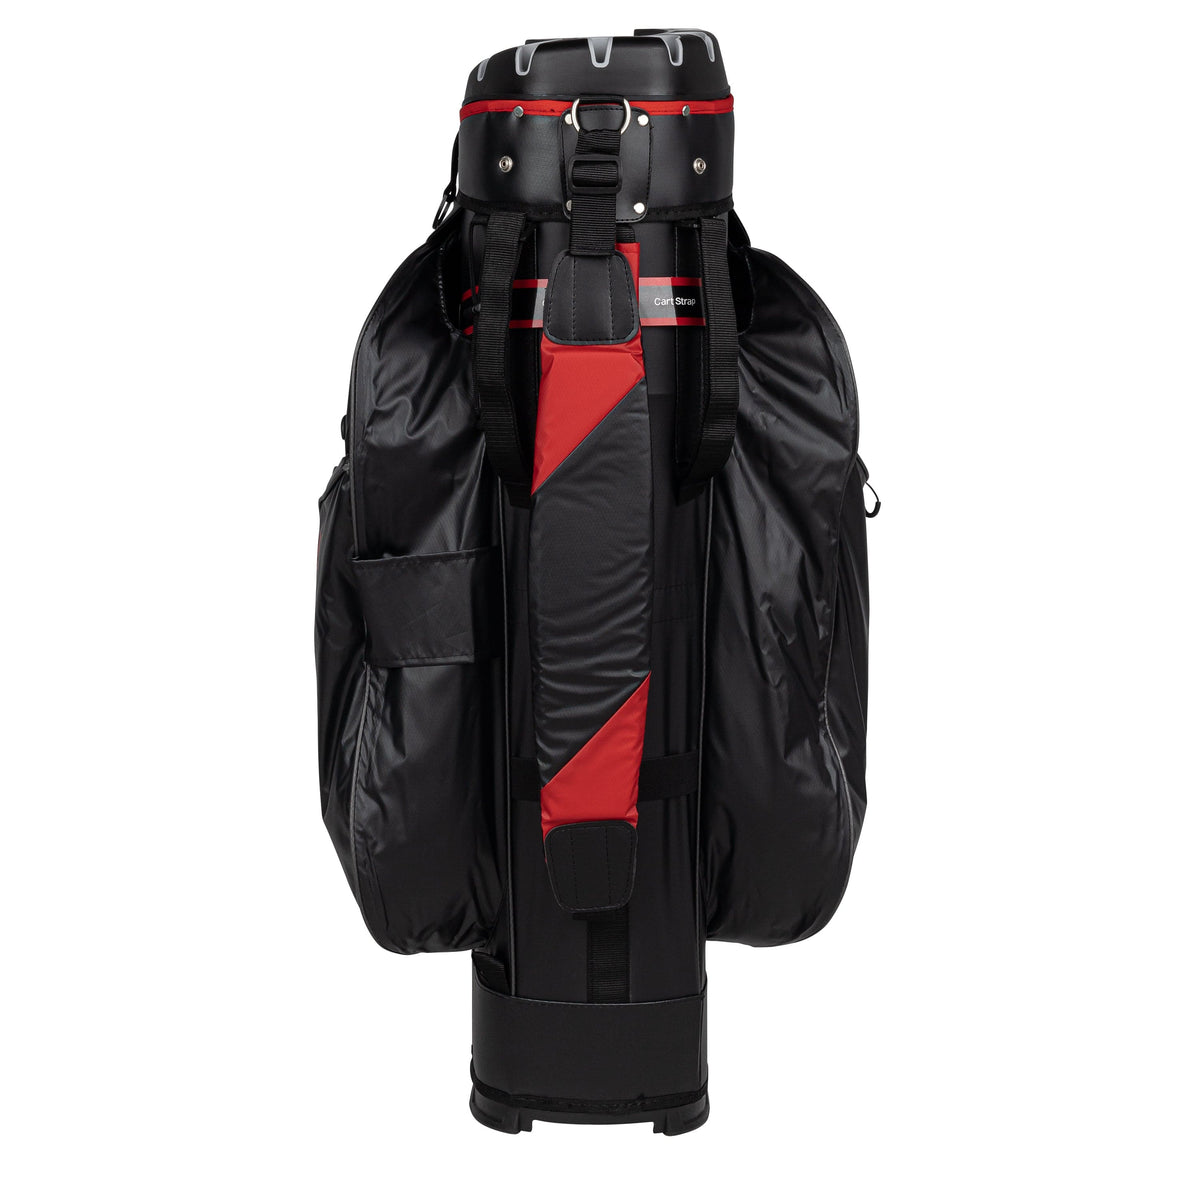 Founders Club 3rd Generation Premium Organizer 14 Way Golf Cart Bag - Black/Red Waterproof